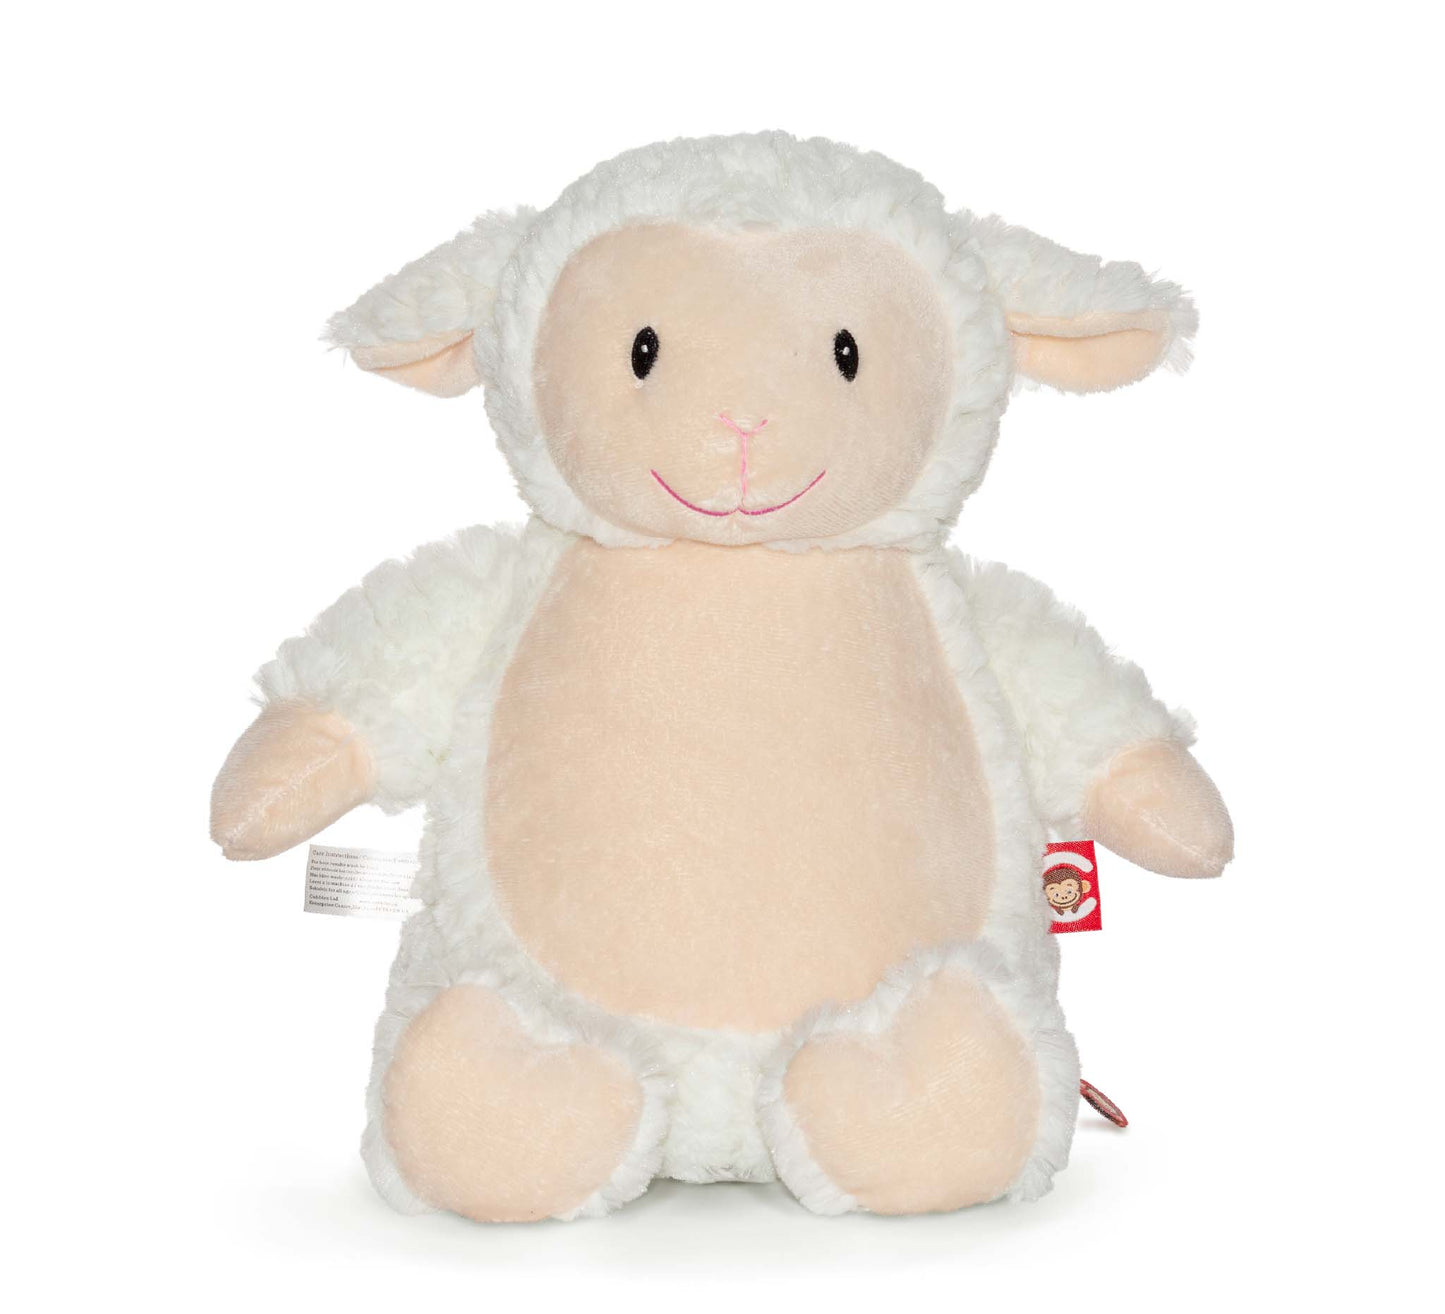 Fluffy Lamb